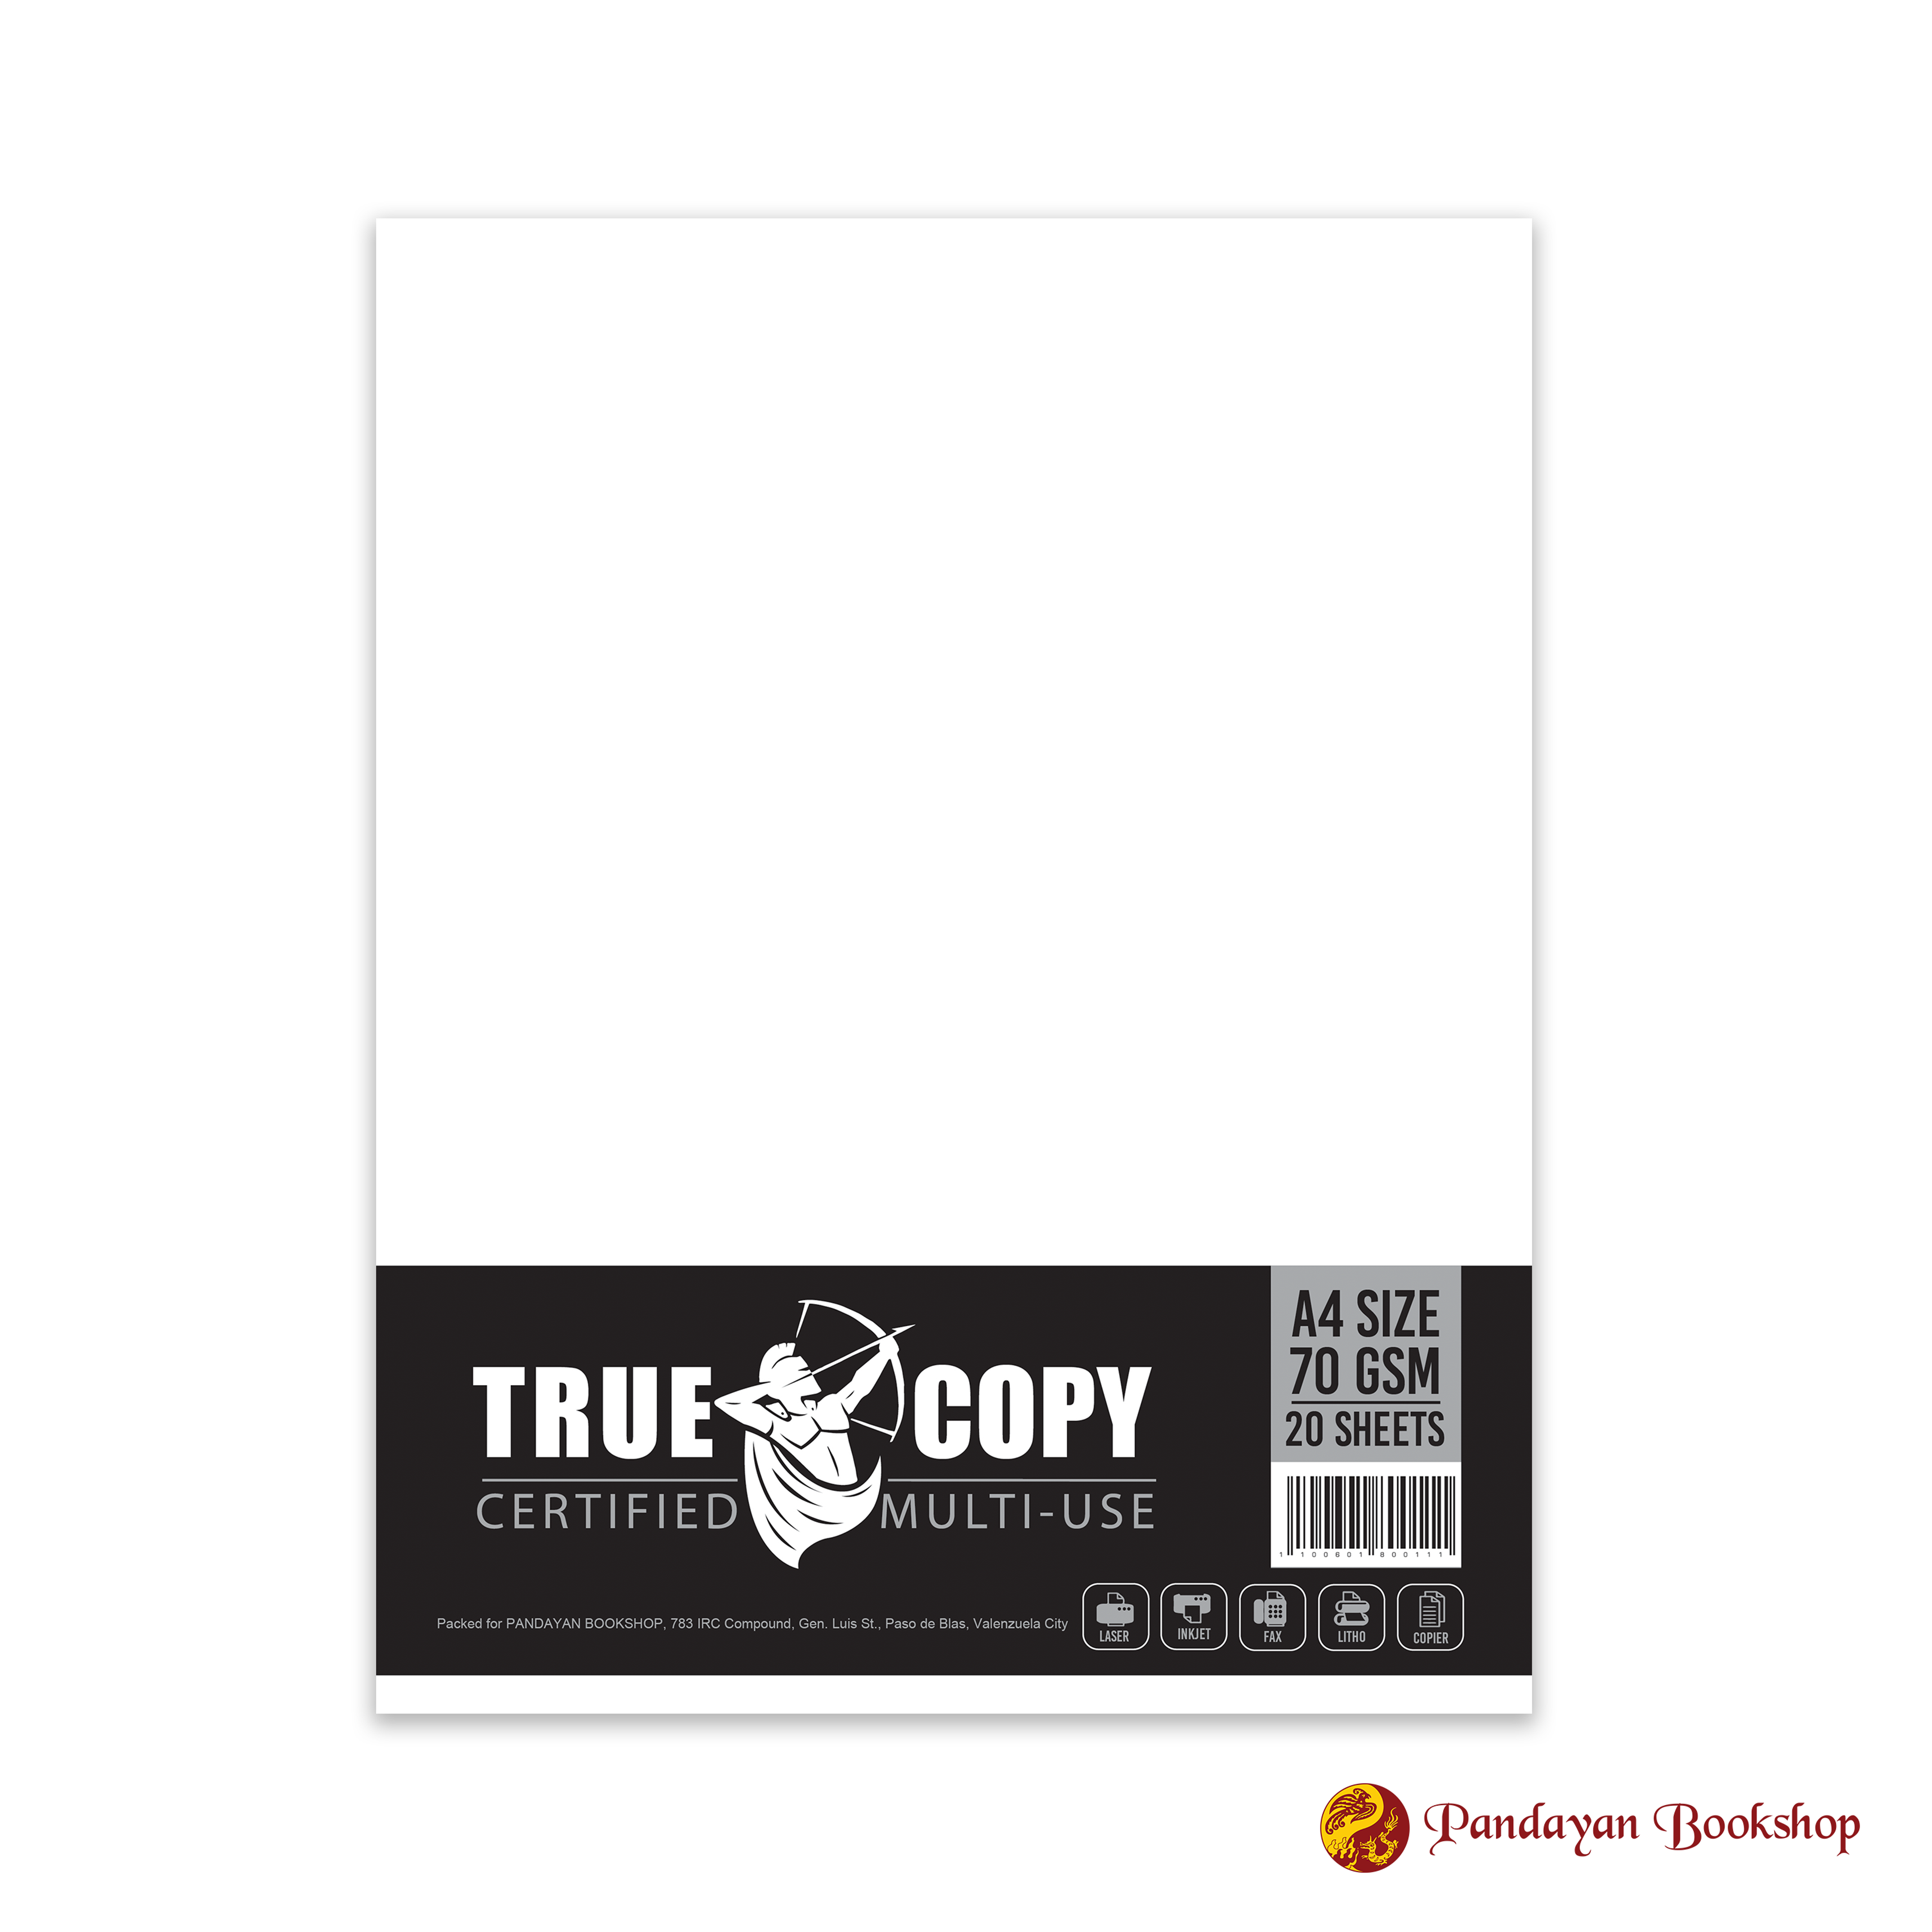 True Copy Multi-Use Paper 70gsm A4 20 Sheets